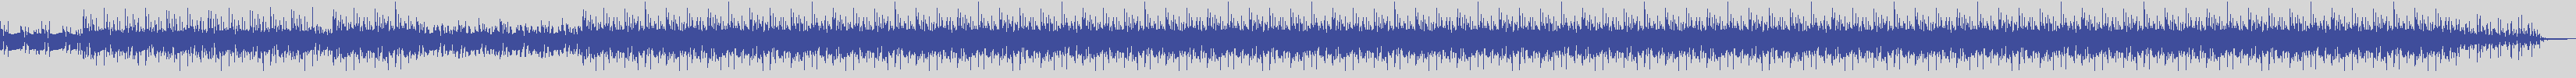 noclouds_chillout [NOC133] The Chill Maestro - Ricordo [Original Mix] audio wave form